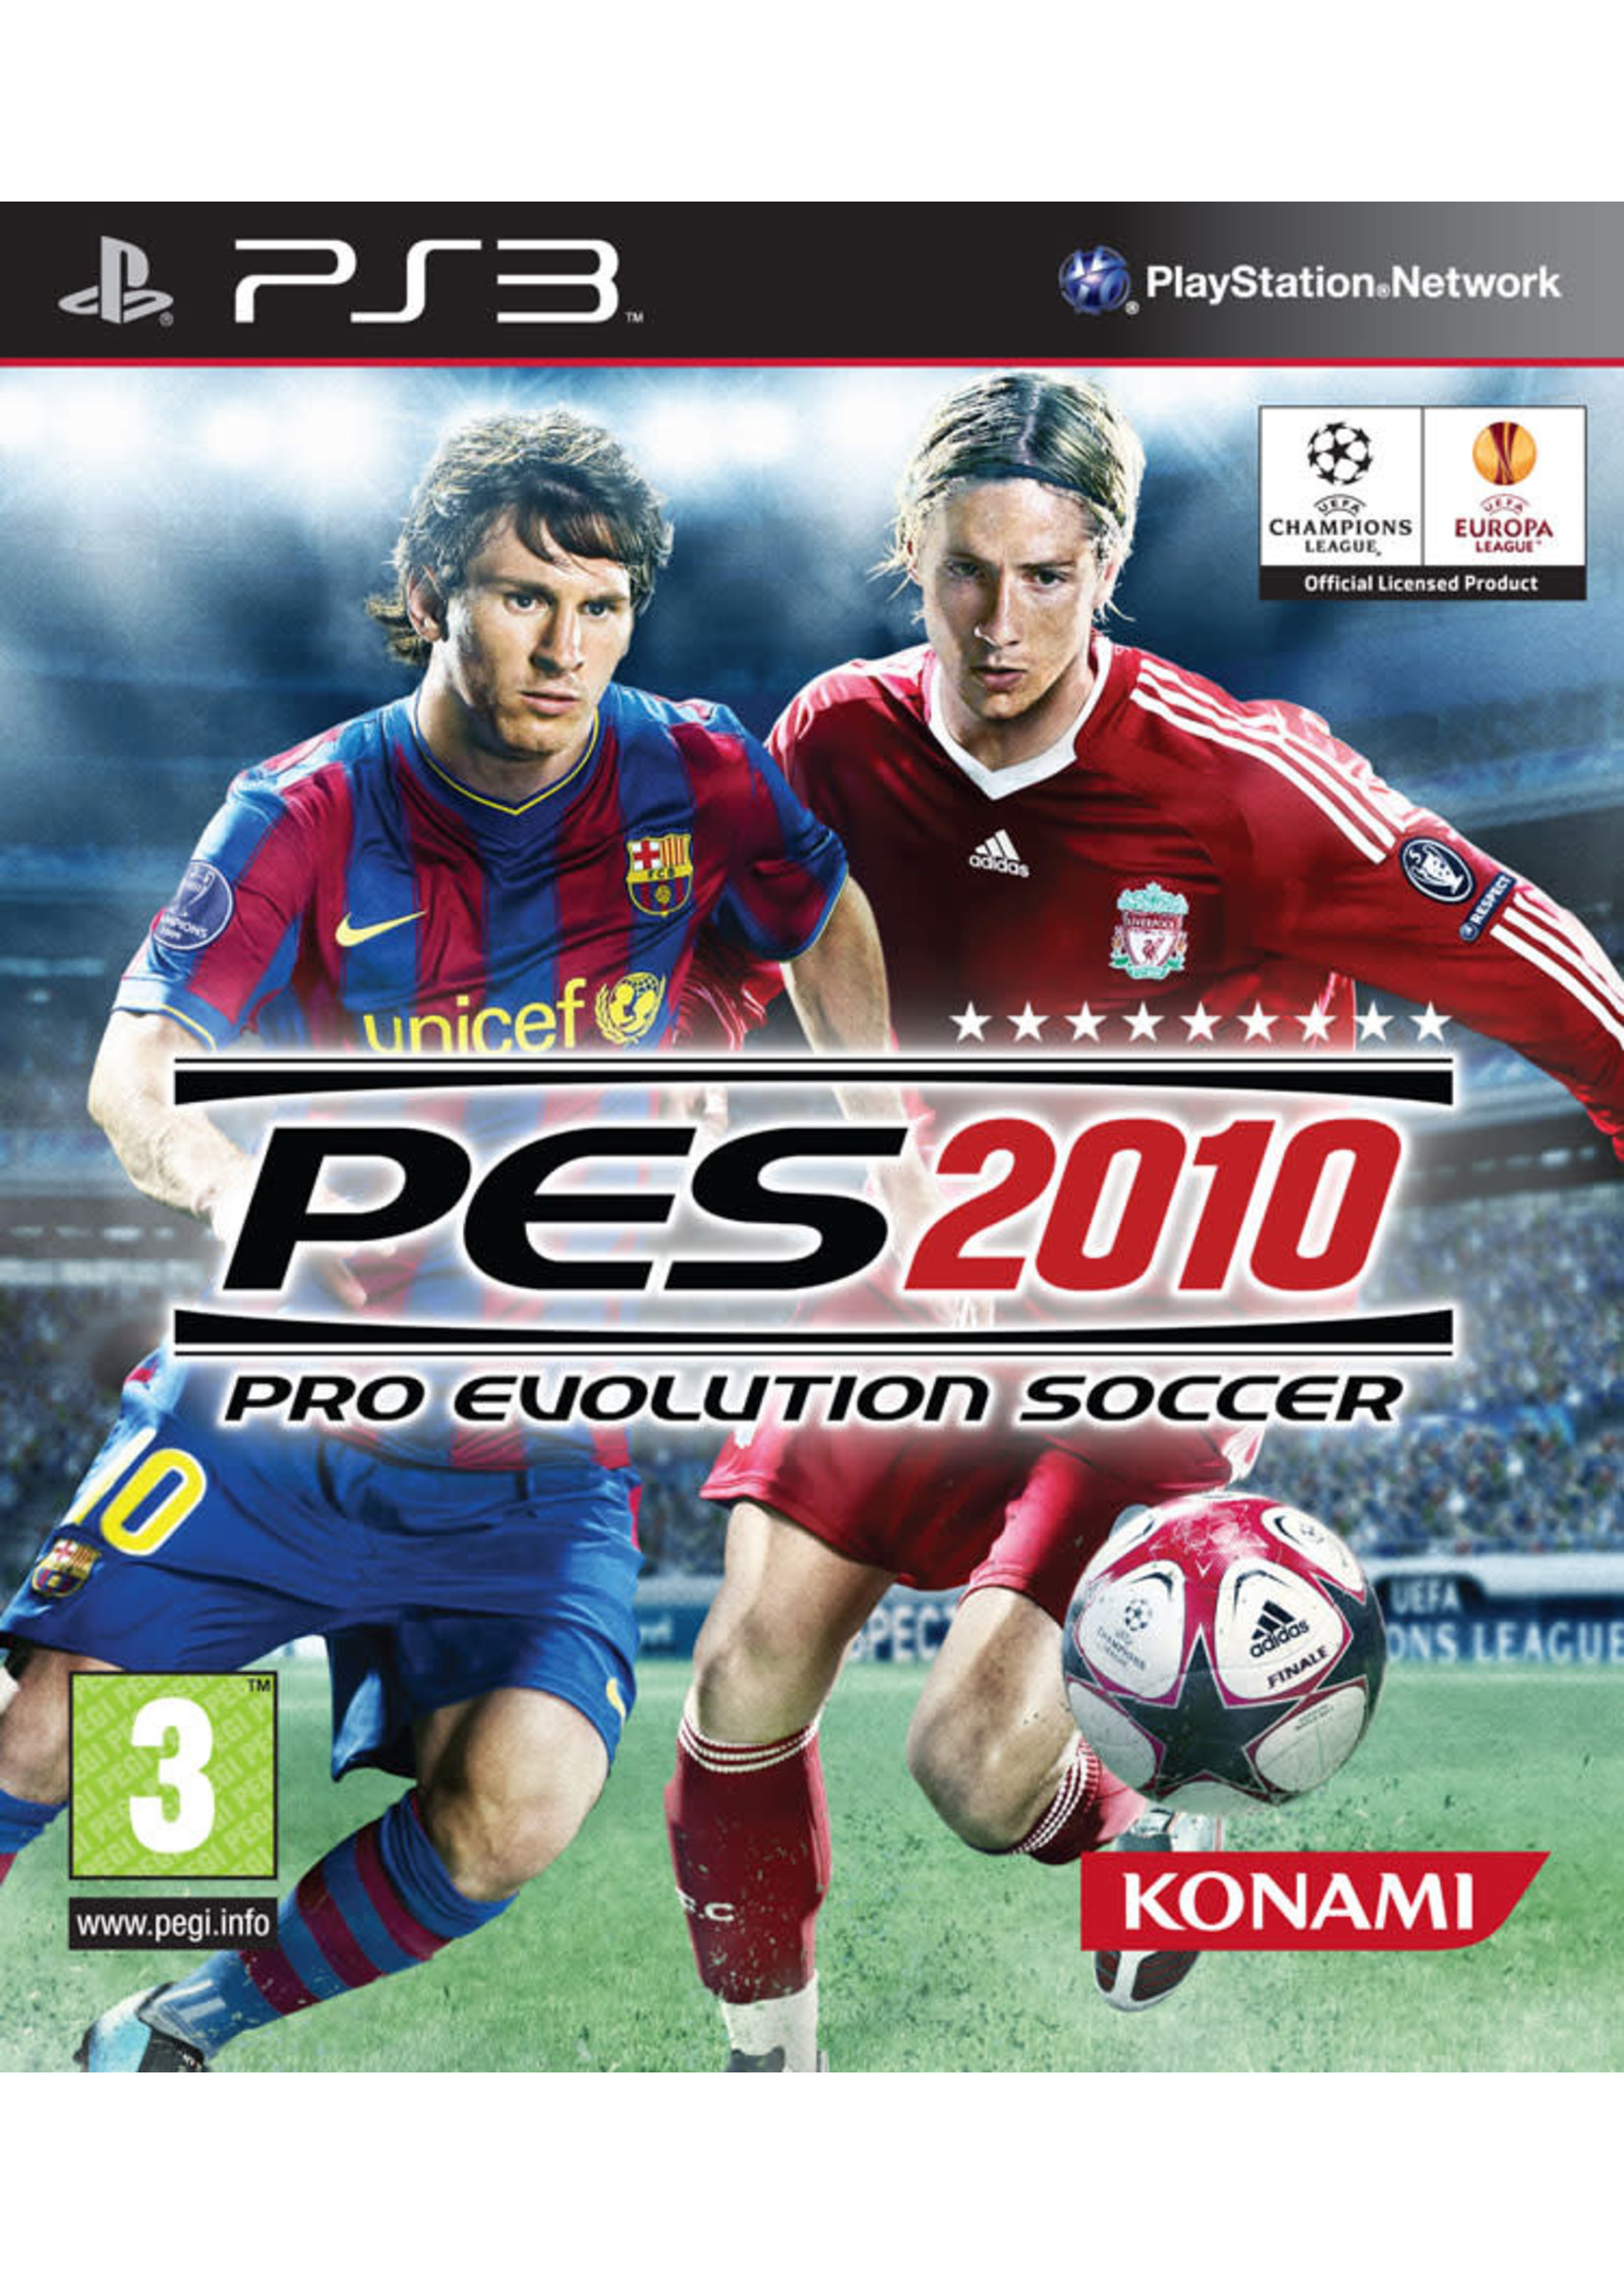 Sony Playstation 3 (PS3) Pro Evolution Soccer 2010